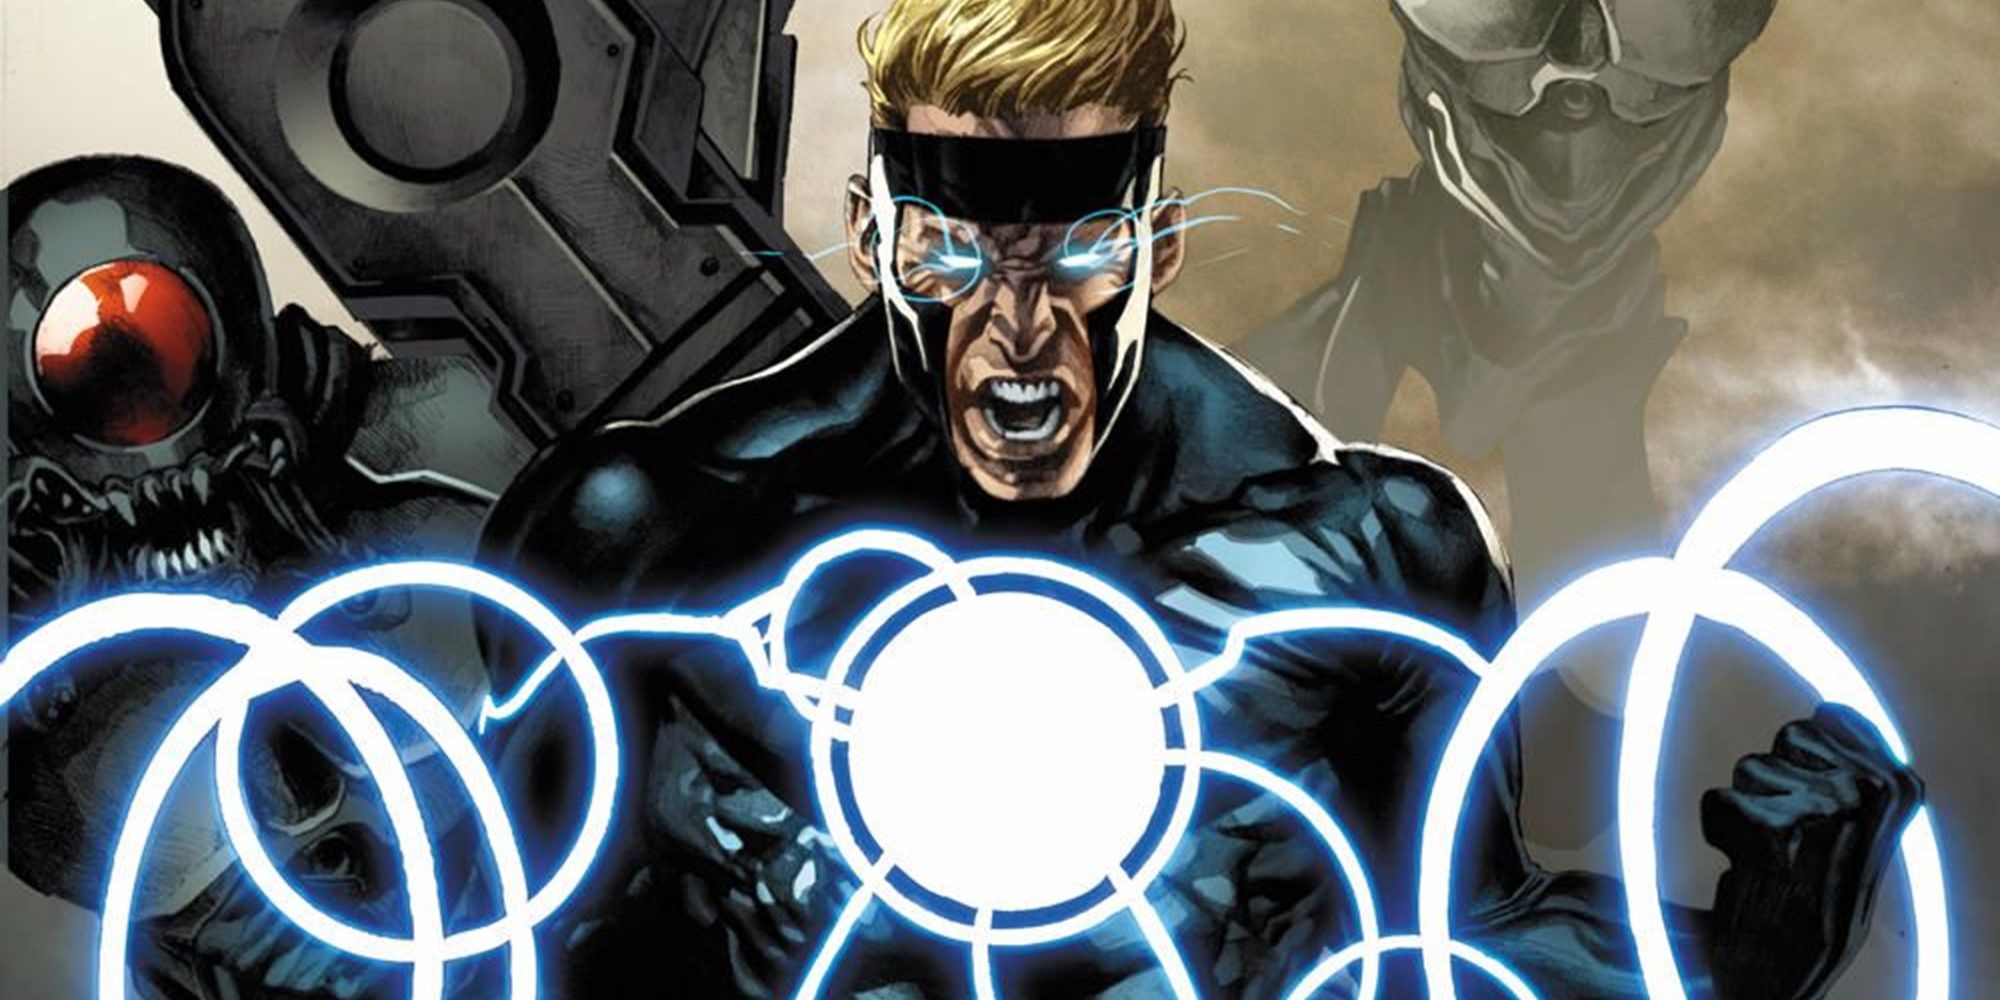 Havok using his powers from Marvel Comics